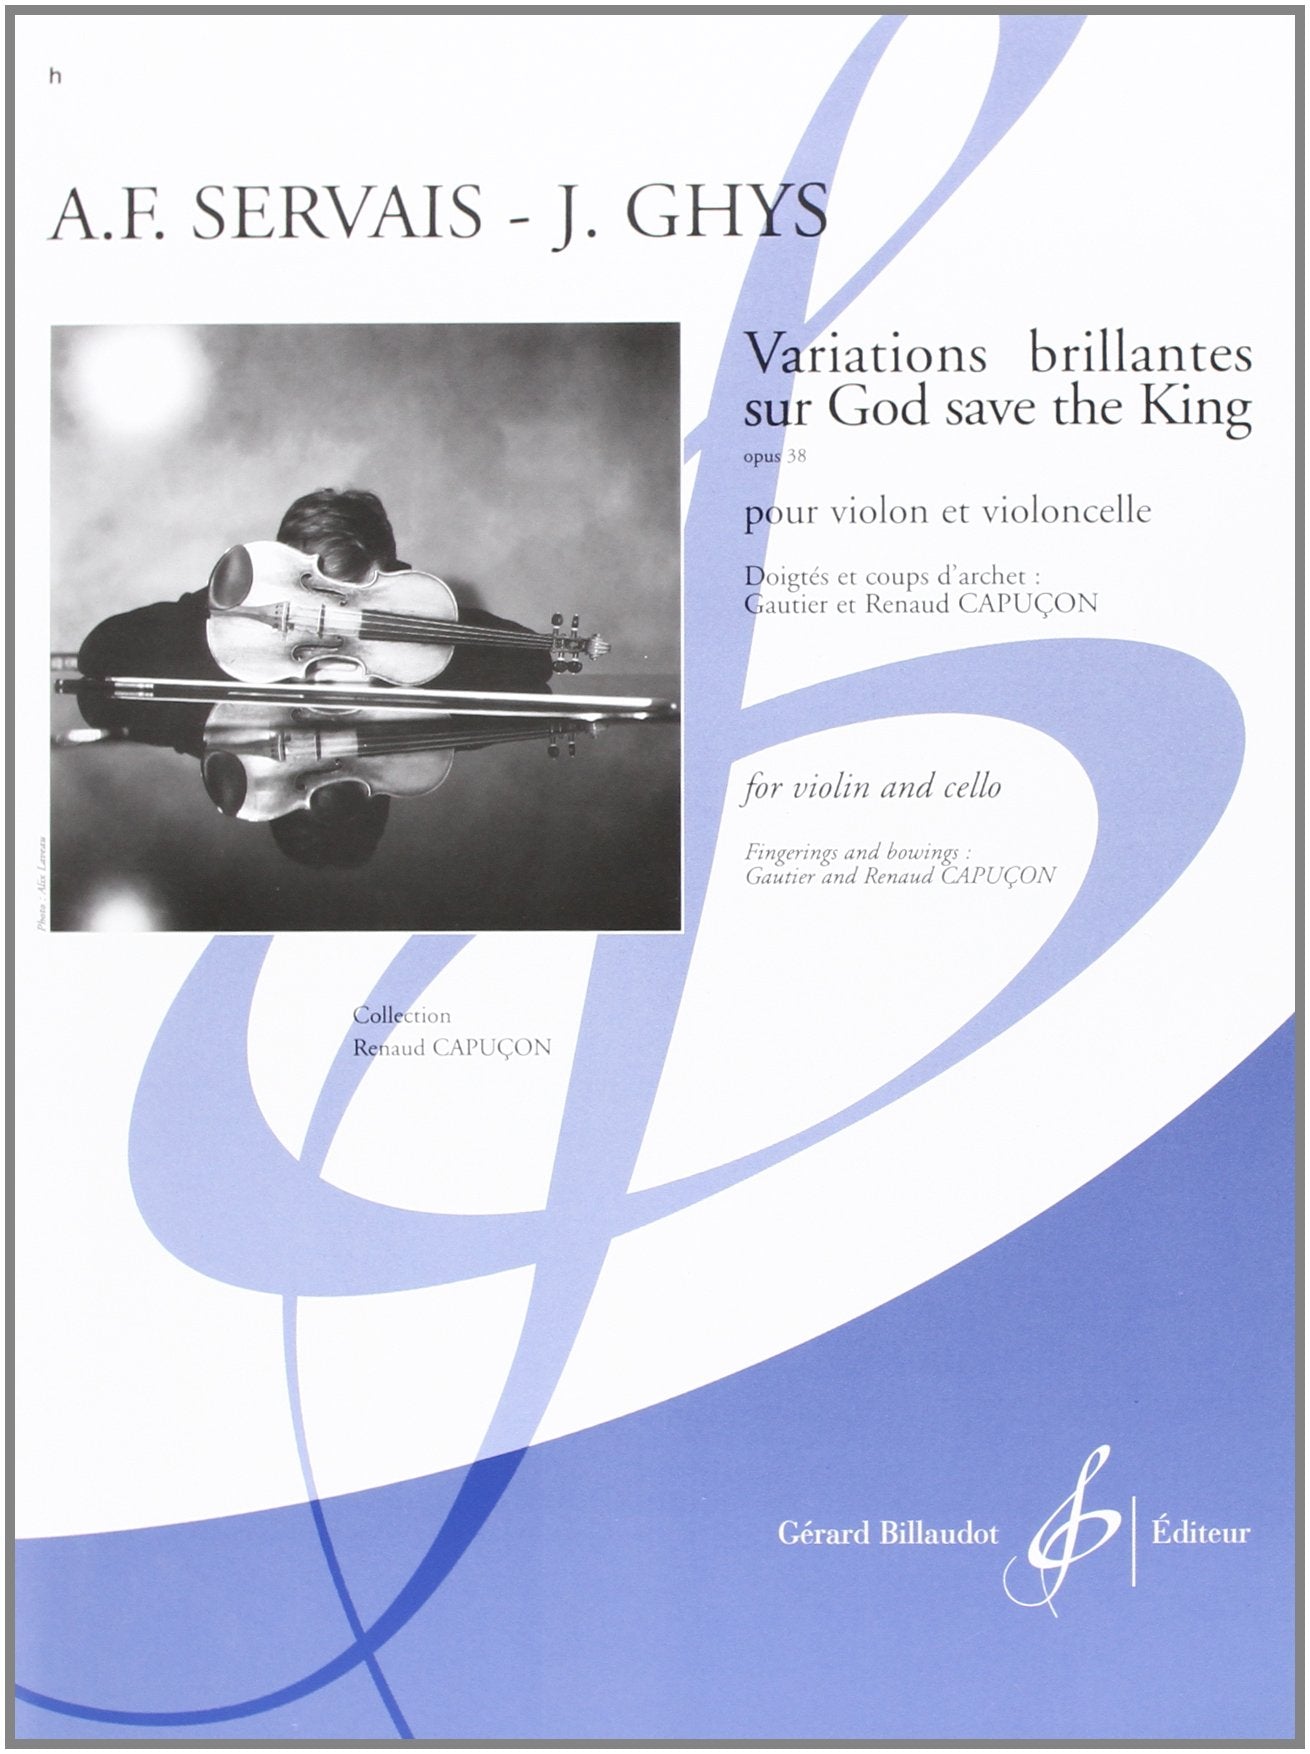 Servais-Ghys: Variations brillantes sur God save the King